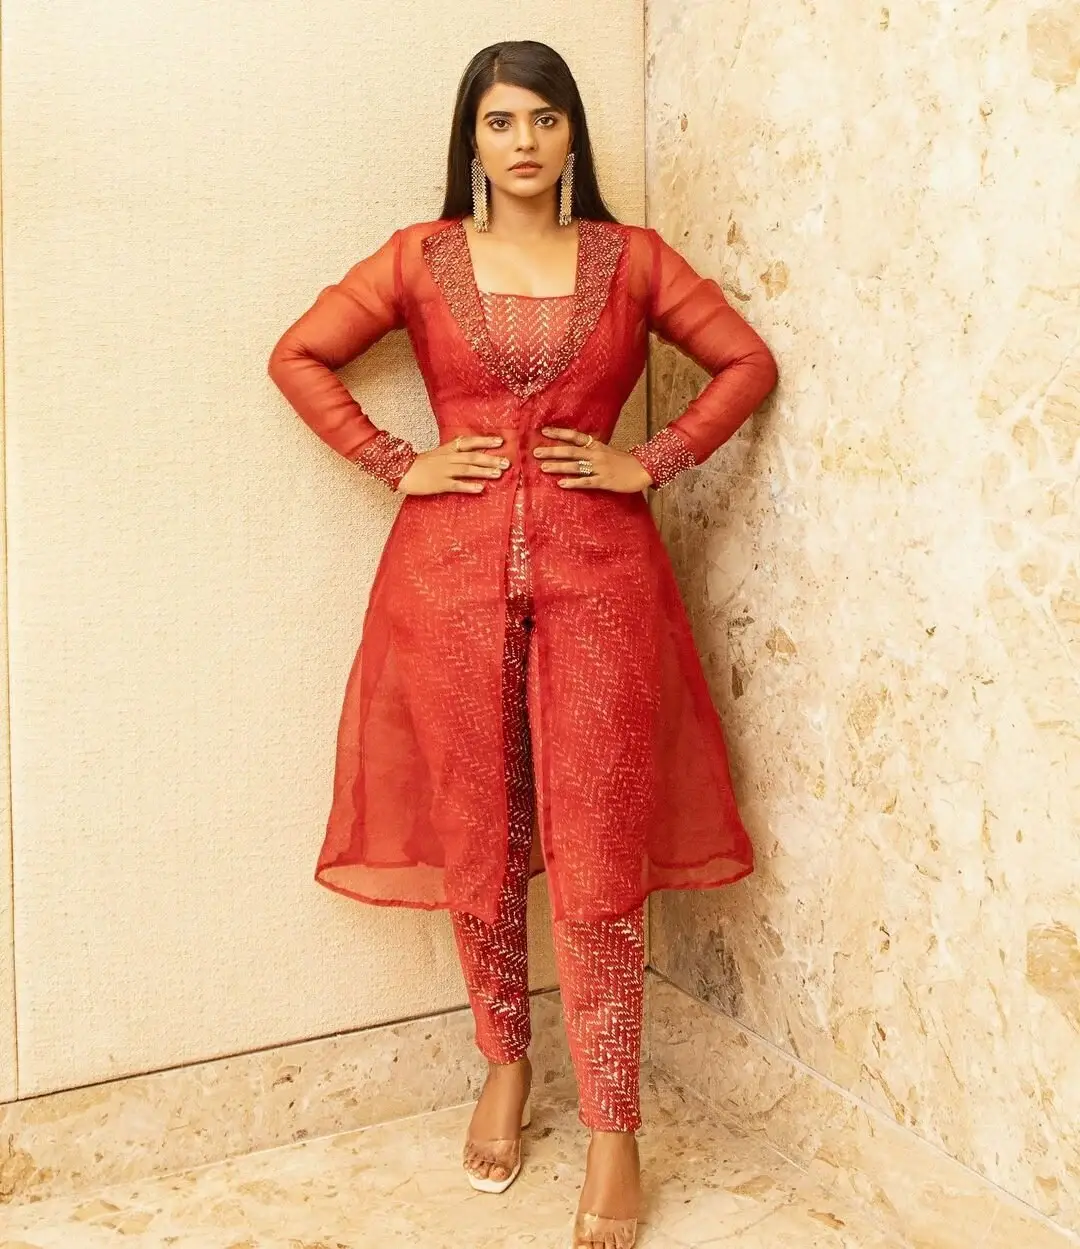 SOUTH INDIAN ACTRESS AISHWARYA RAJESH IN RED DRESS 6